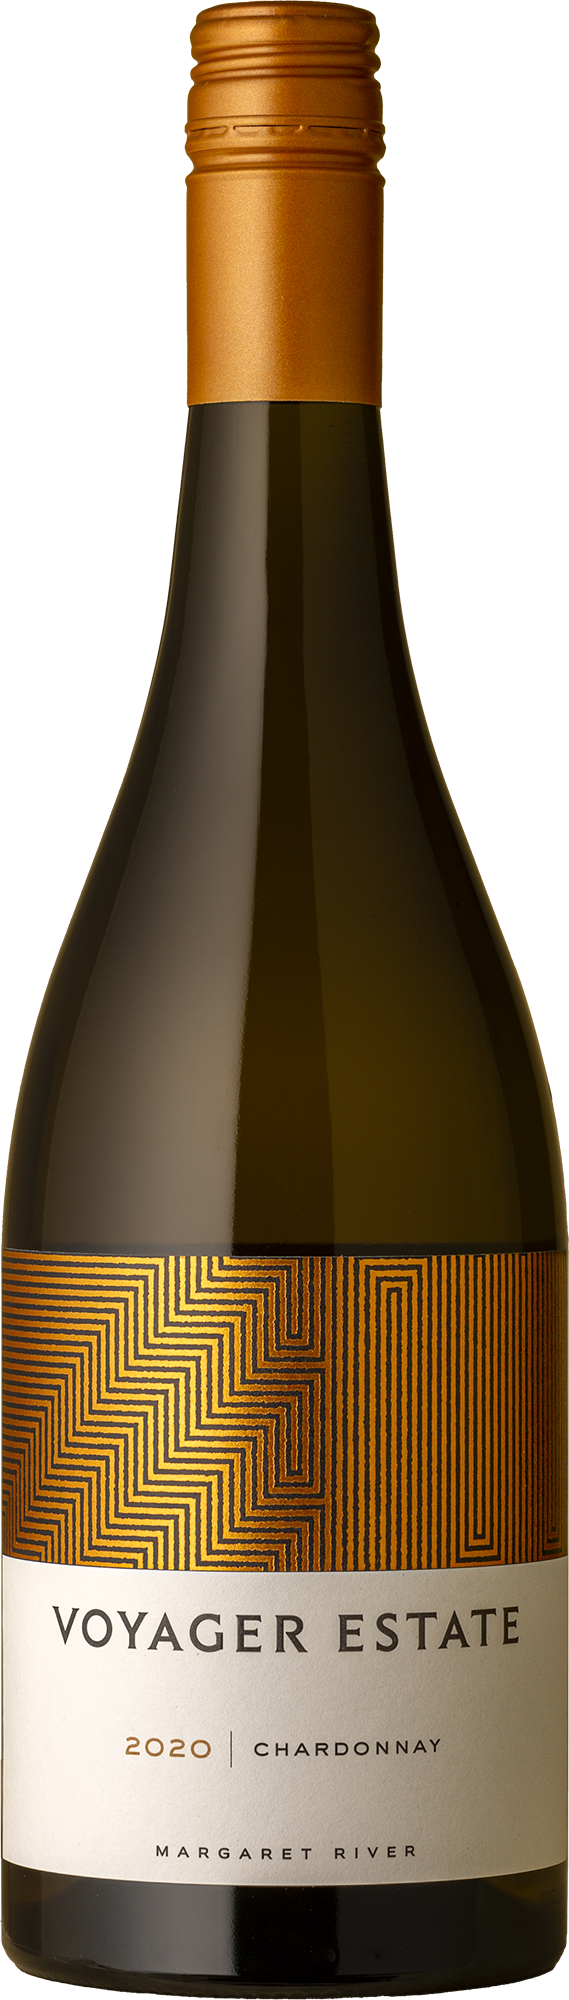 Voyager Estate - Chardonnay 2020 White Wine